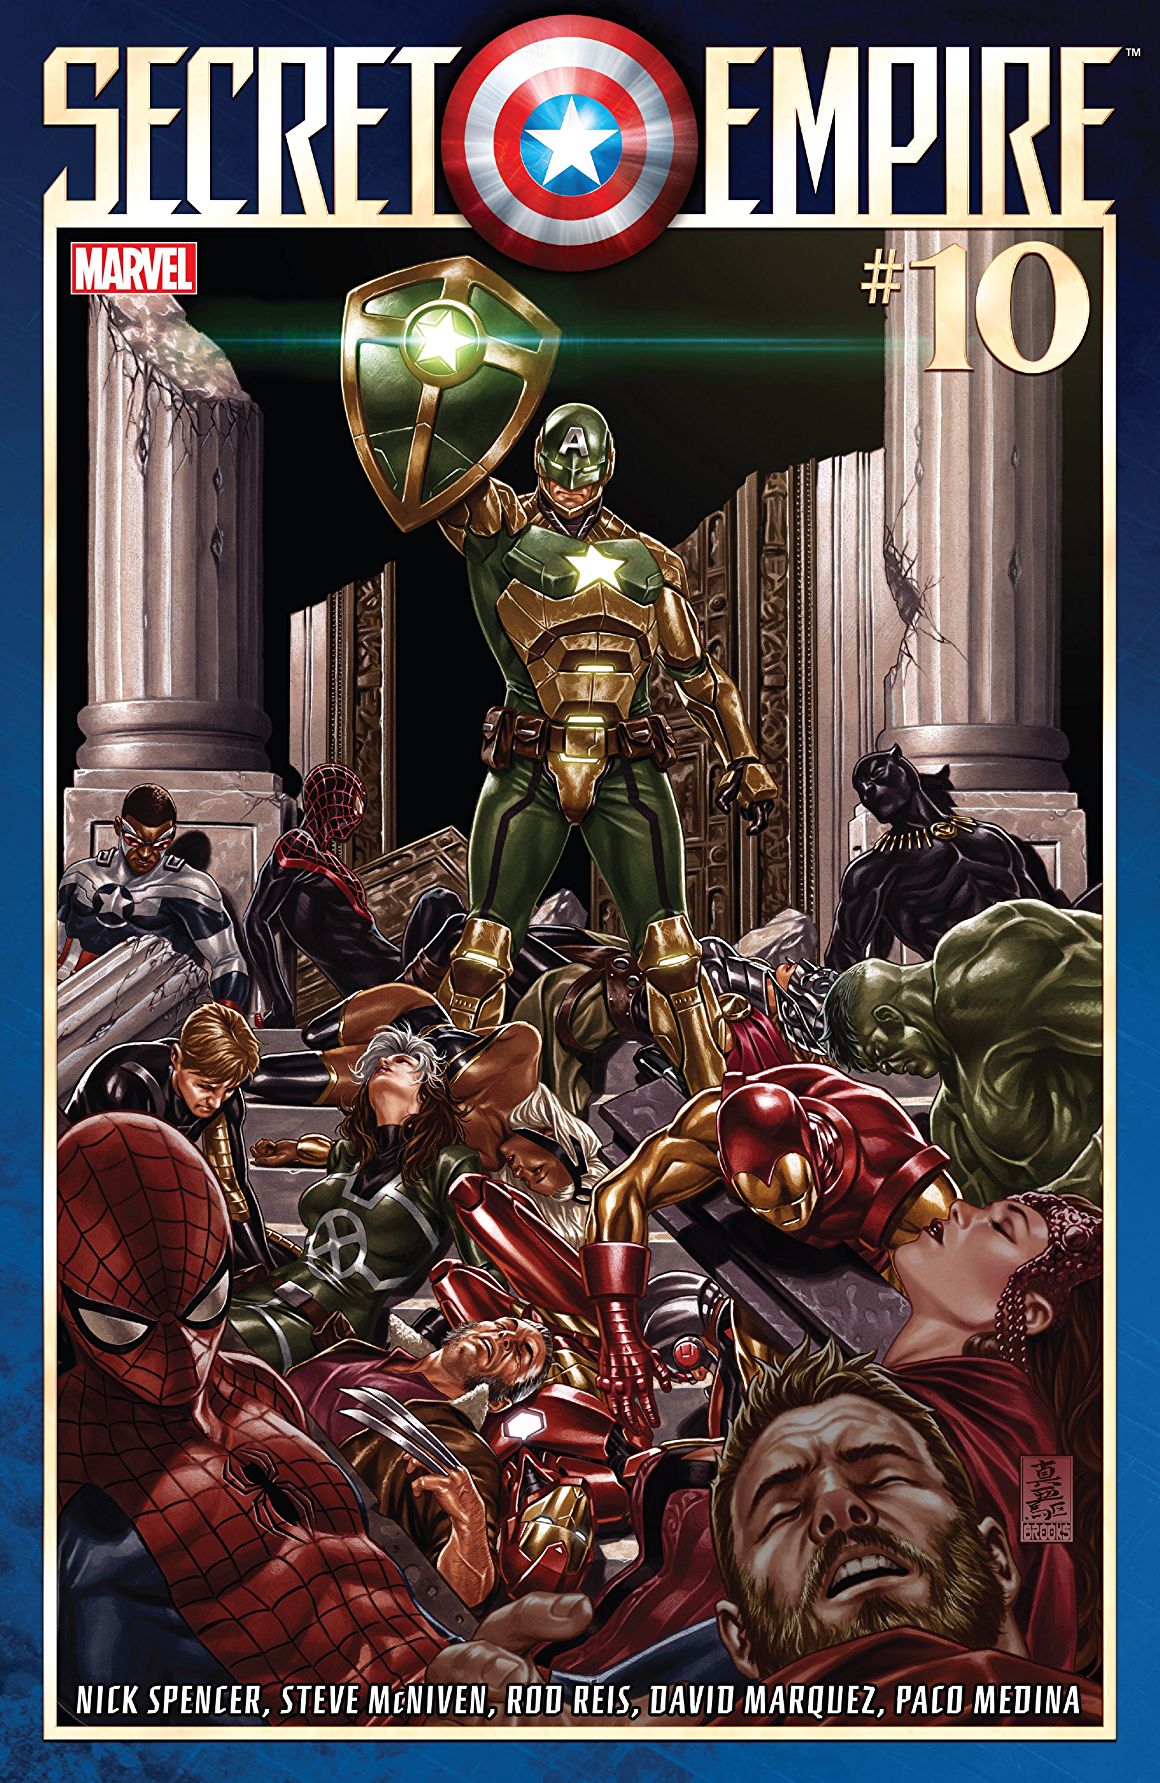 Marvel Comics & Secret Empire Spoilers: Secret Empire #2 Has